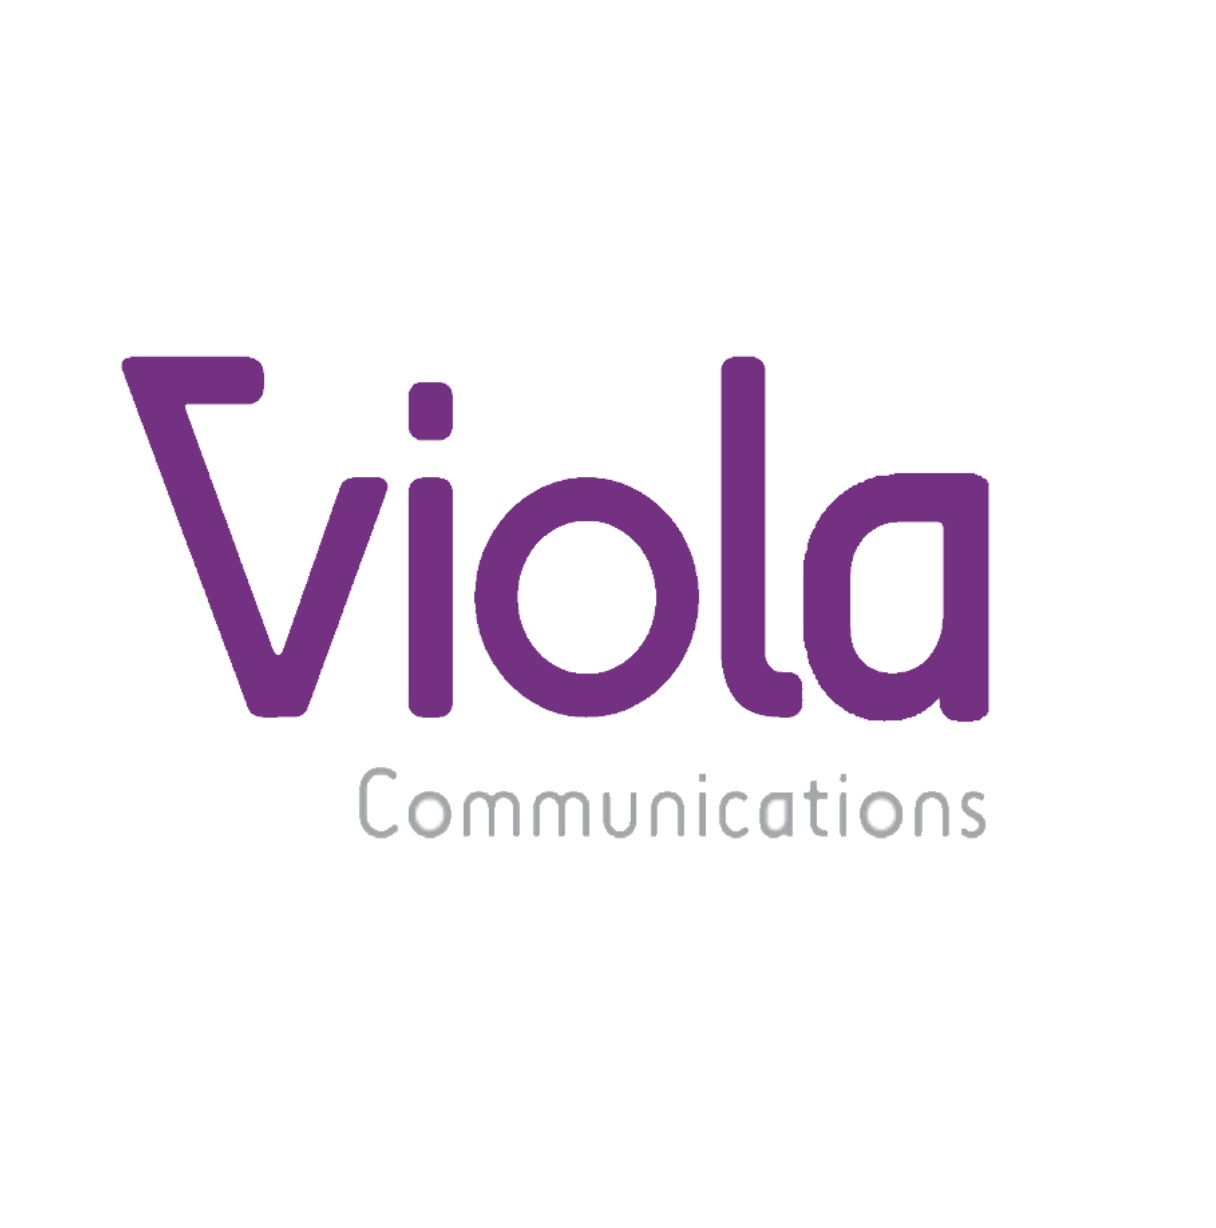 Viola Communication